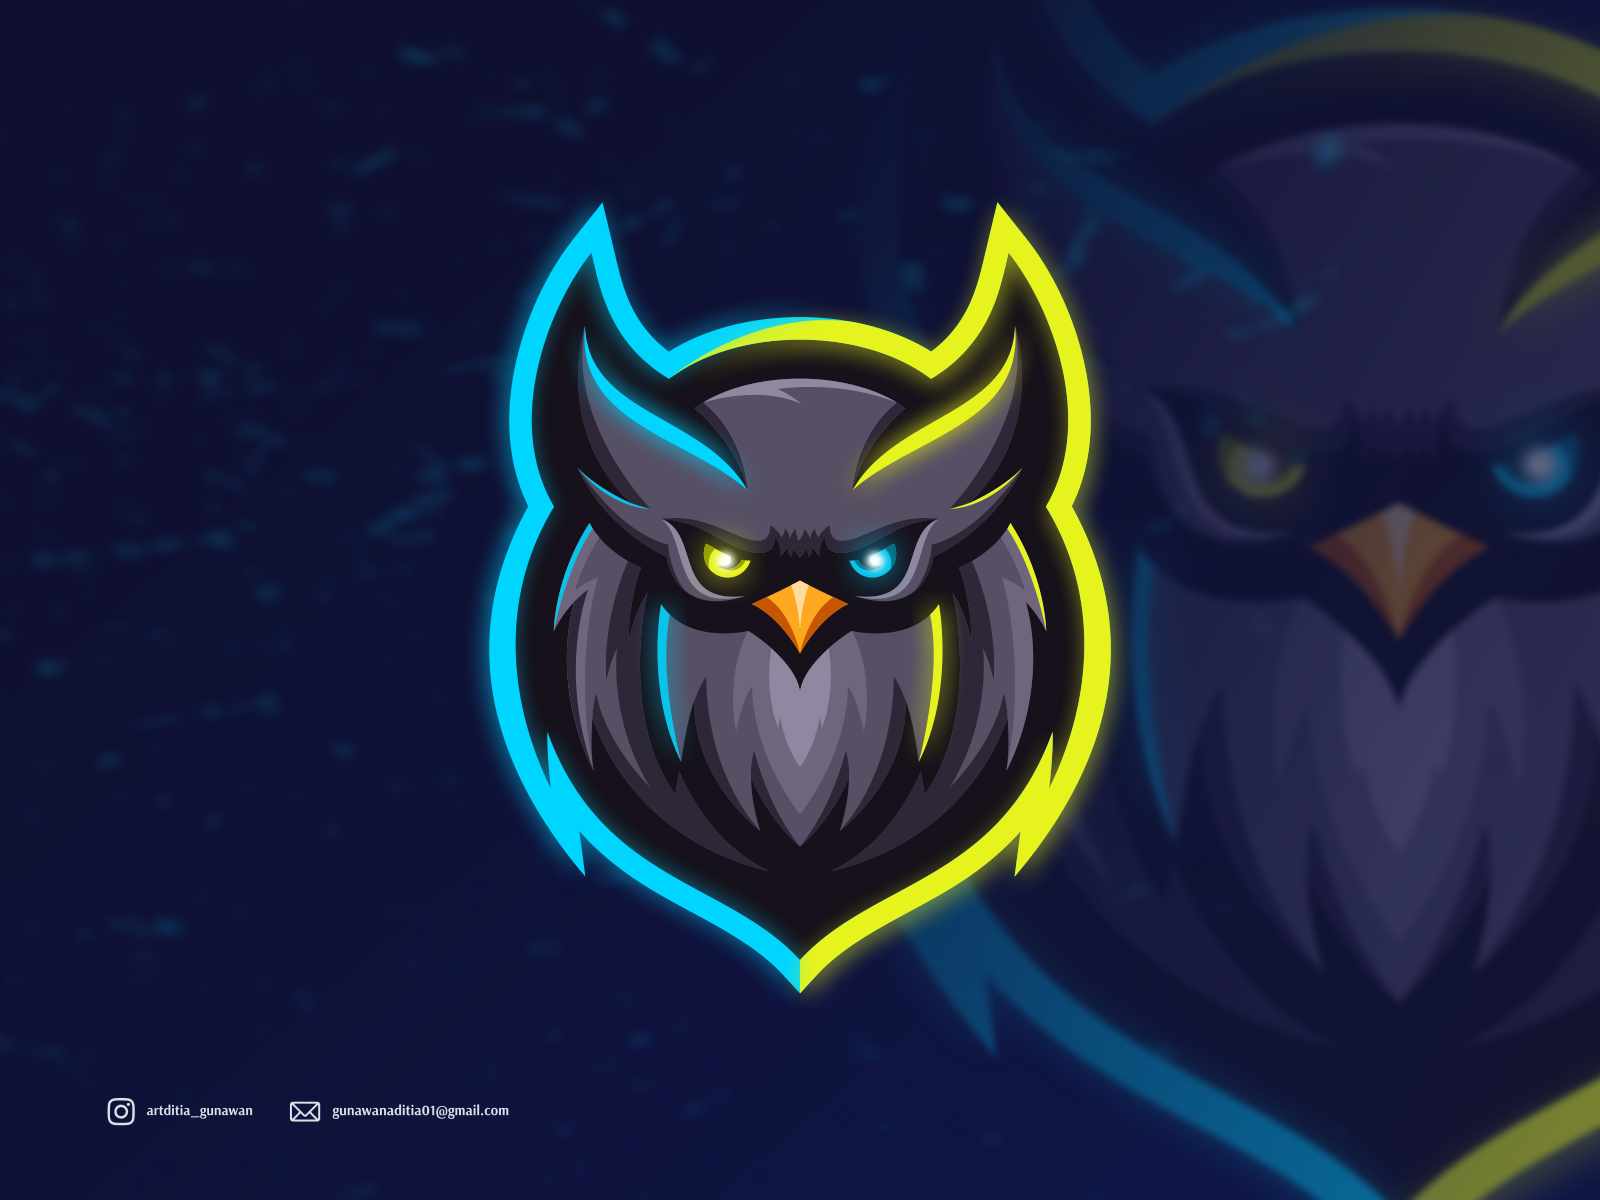 owl logo designs